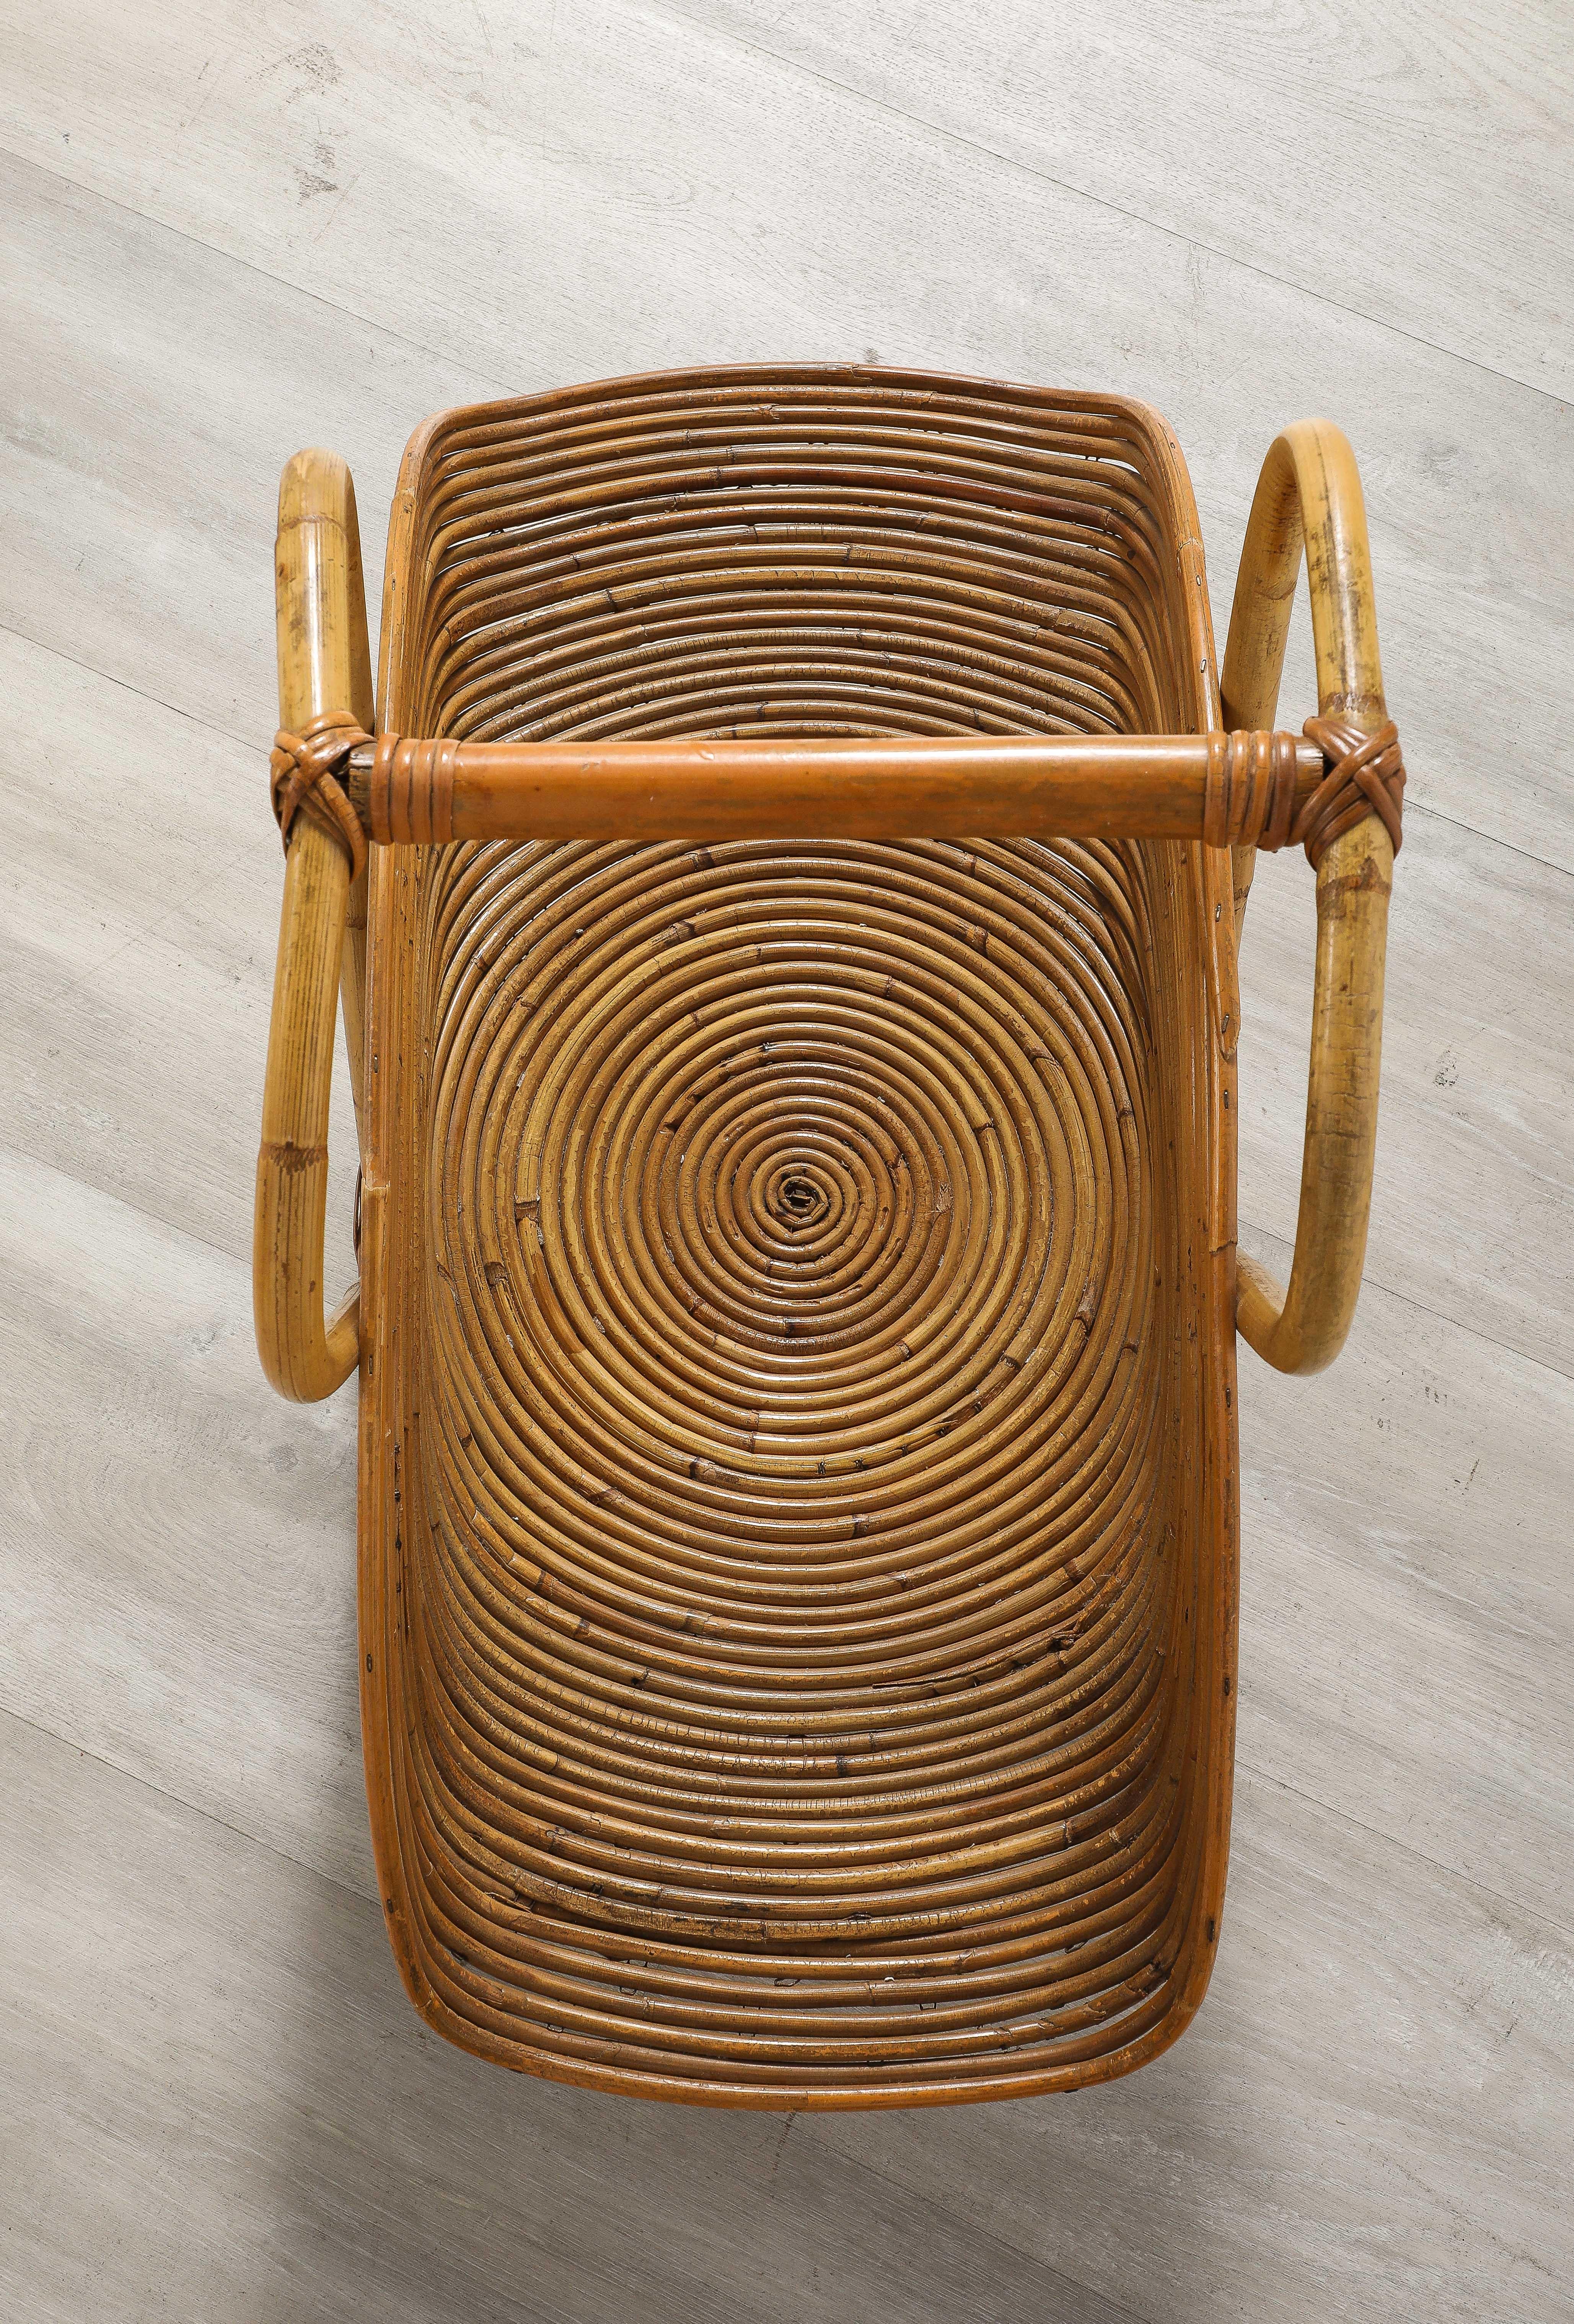 Italian 1950's Bamboo Basket For Sale 5